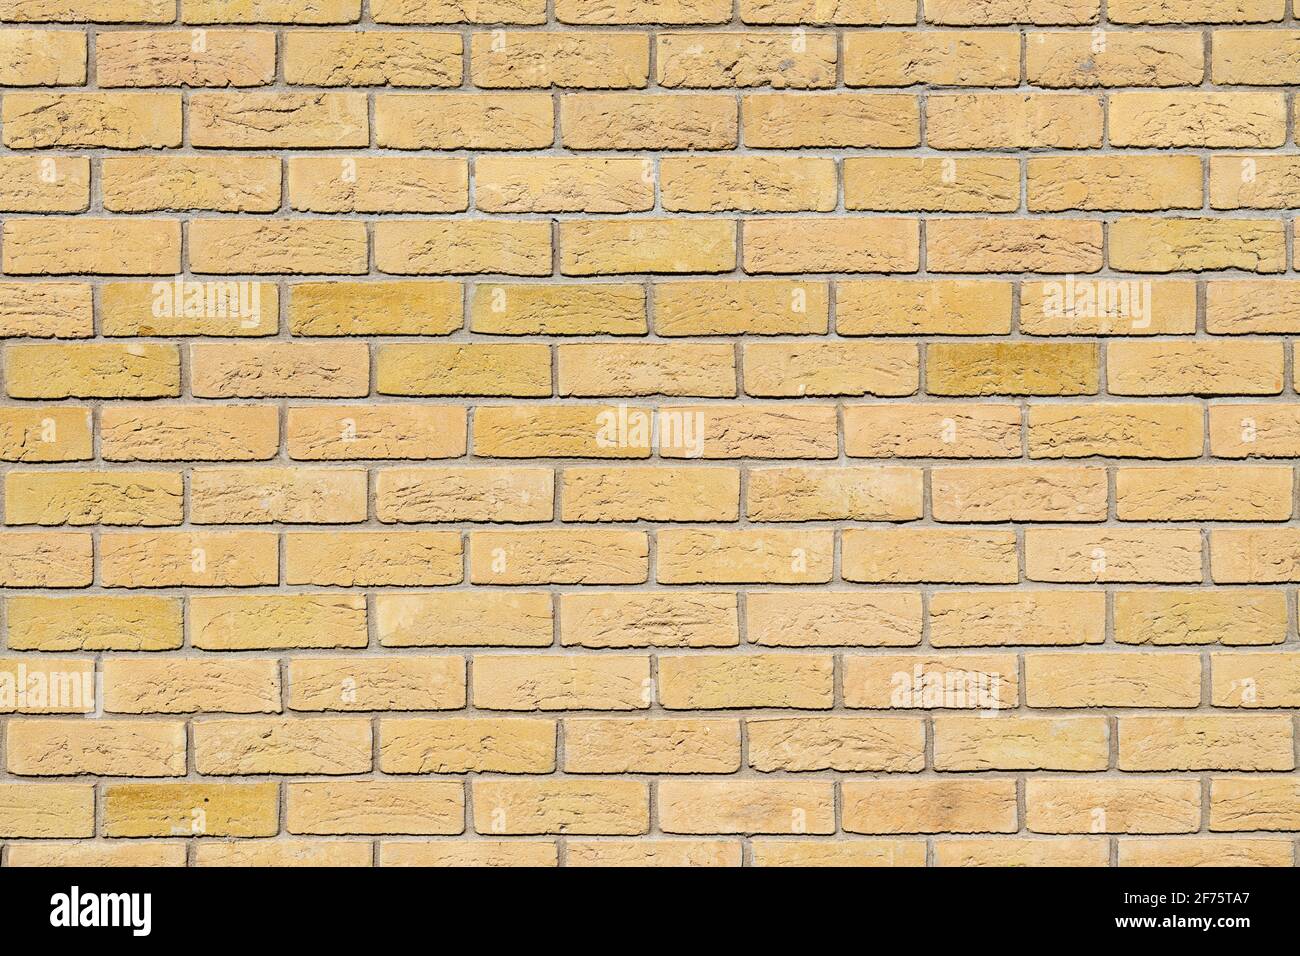 Brick wall background variety of bricks brick wall made with regular new house bricks High resolution high quality photo Stock Photo